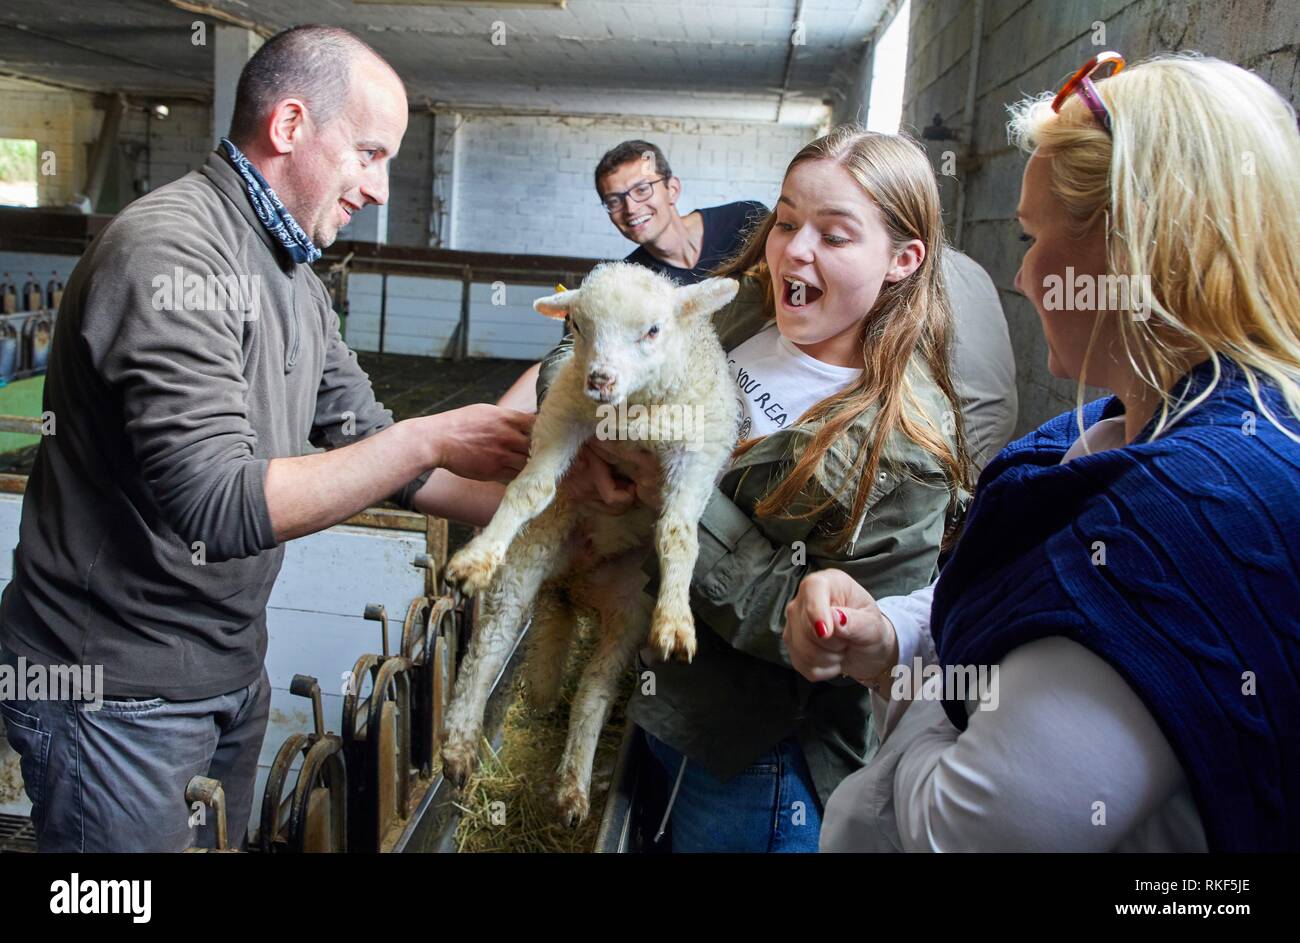 Tour guide with group, Girl with lamb, Caserio Mausitxa, Elgoibar, Gipuzkoa, Basque Country, Spain, Europe Stock Photo